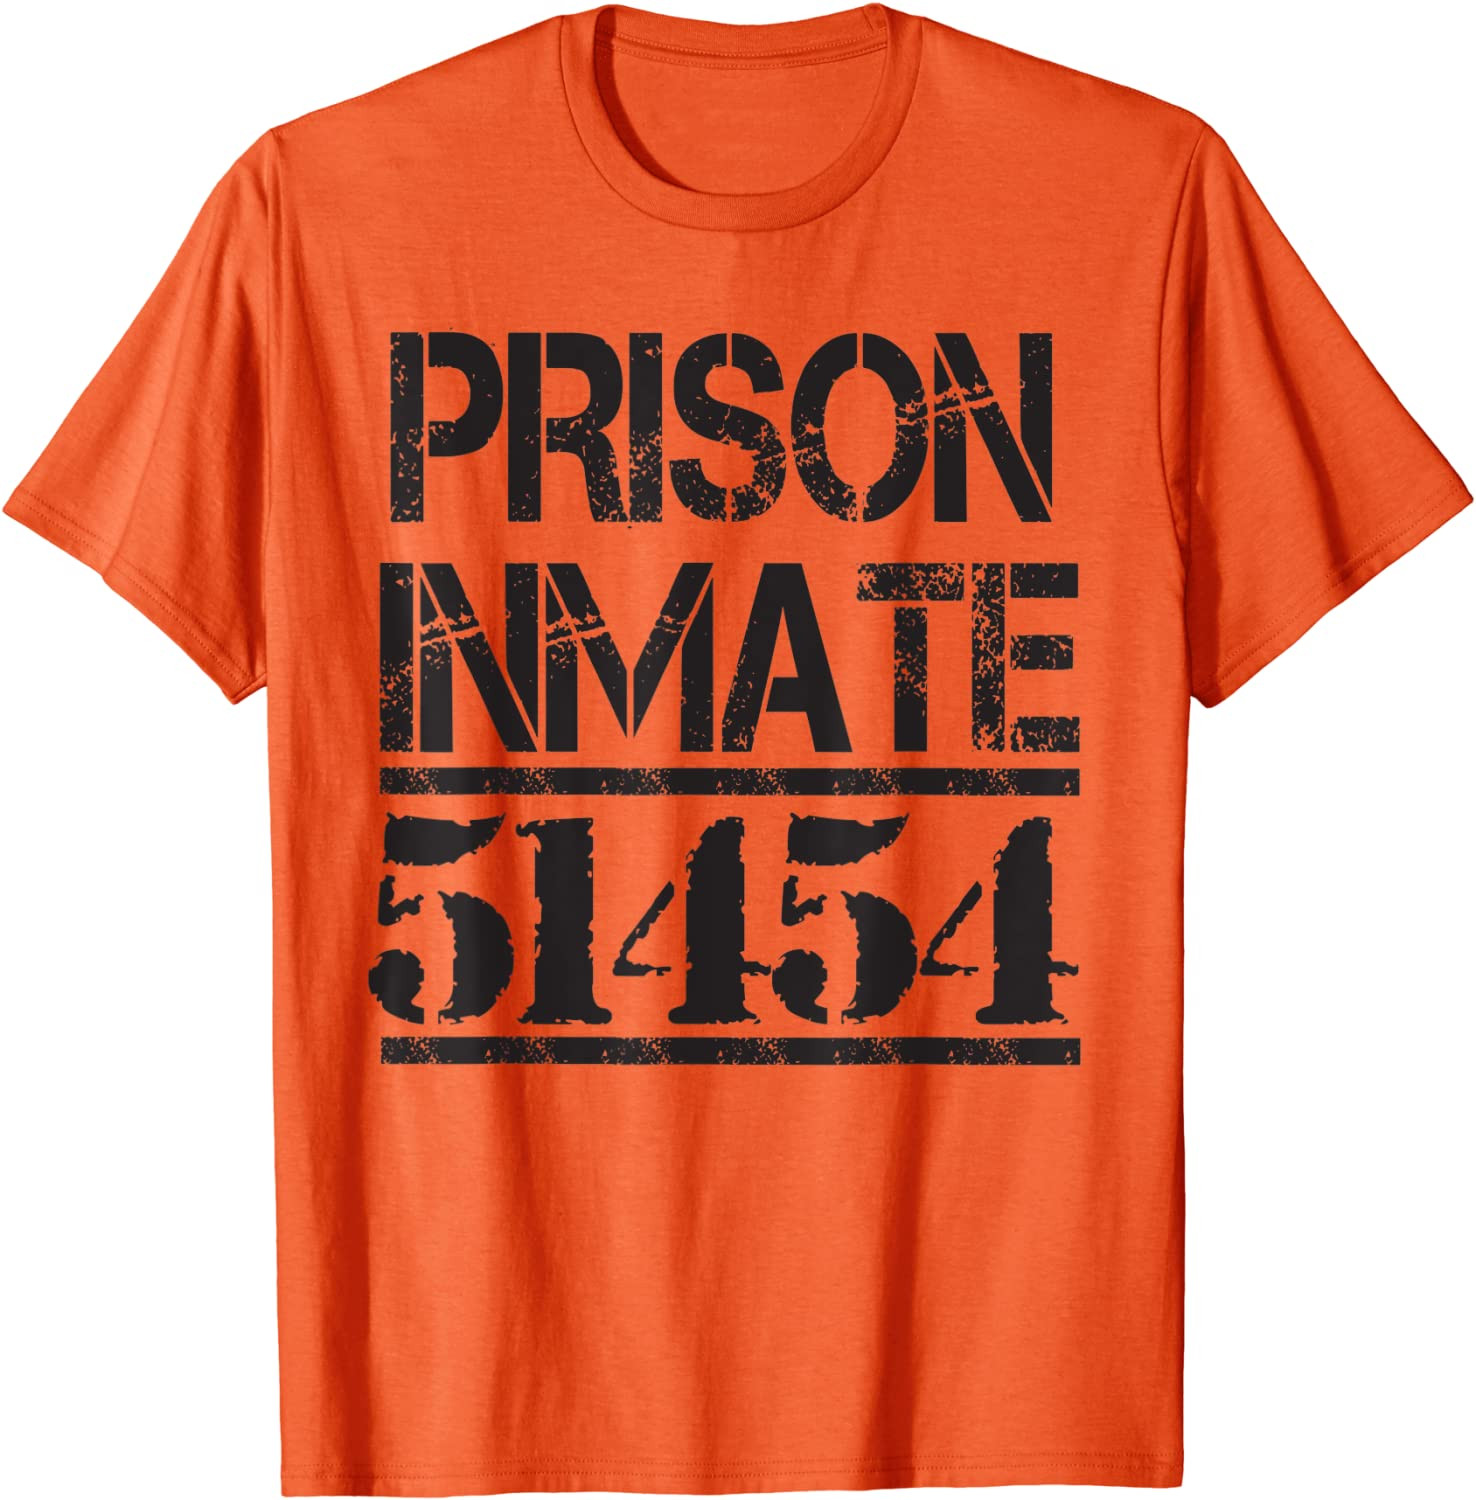 Halloween Inmate Prison Men Women Suit Lazy Costume Prisoner T-Shirt